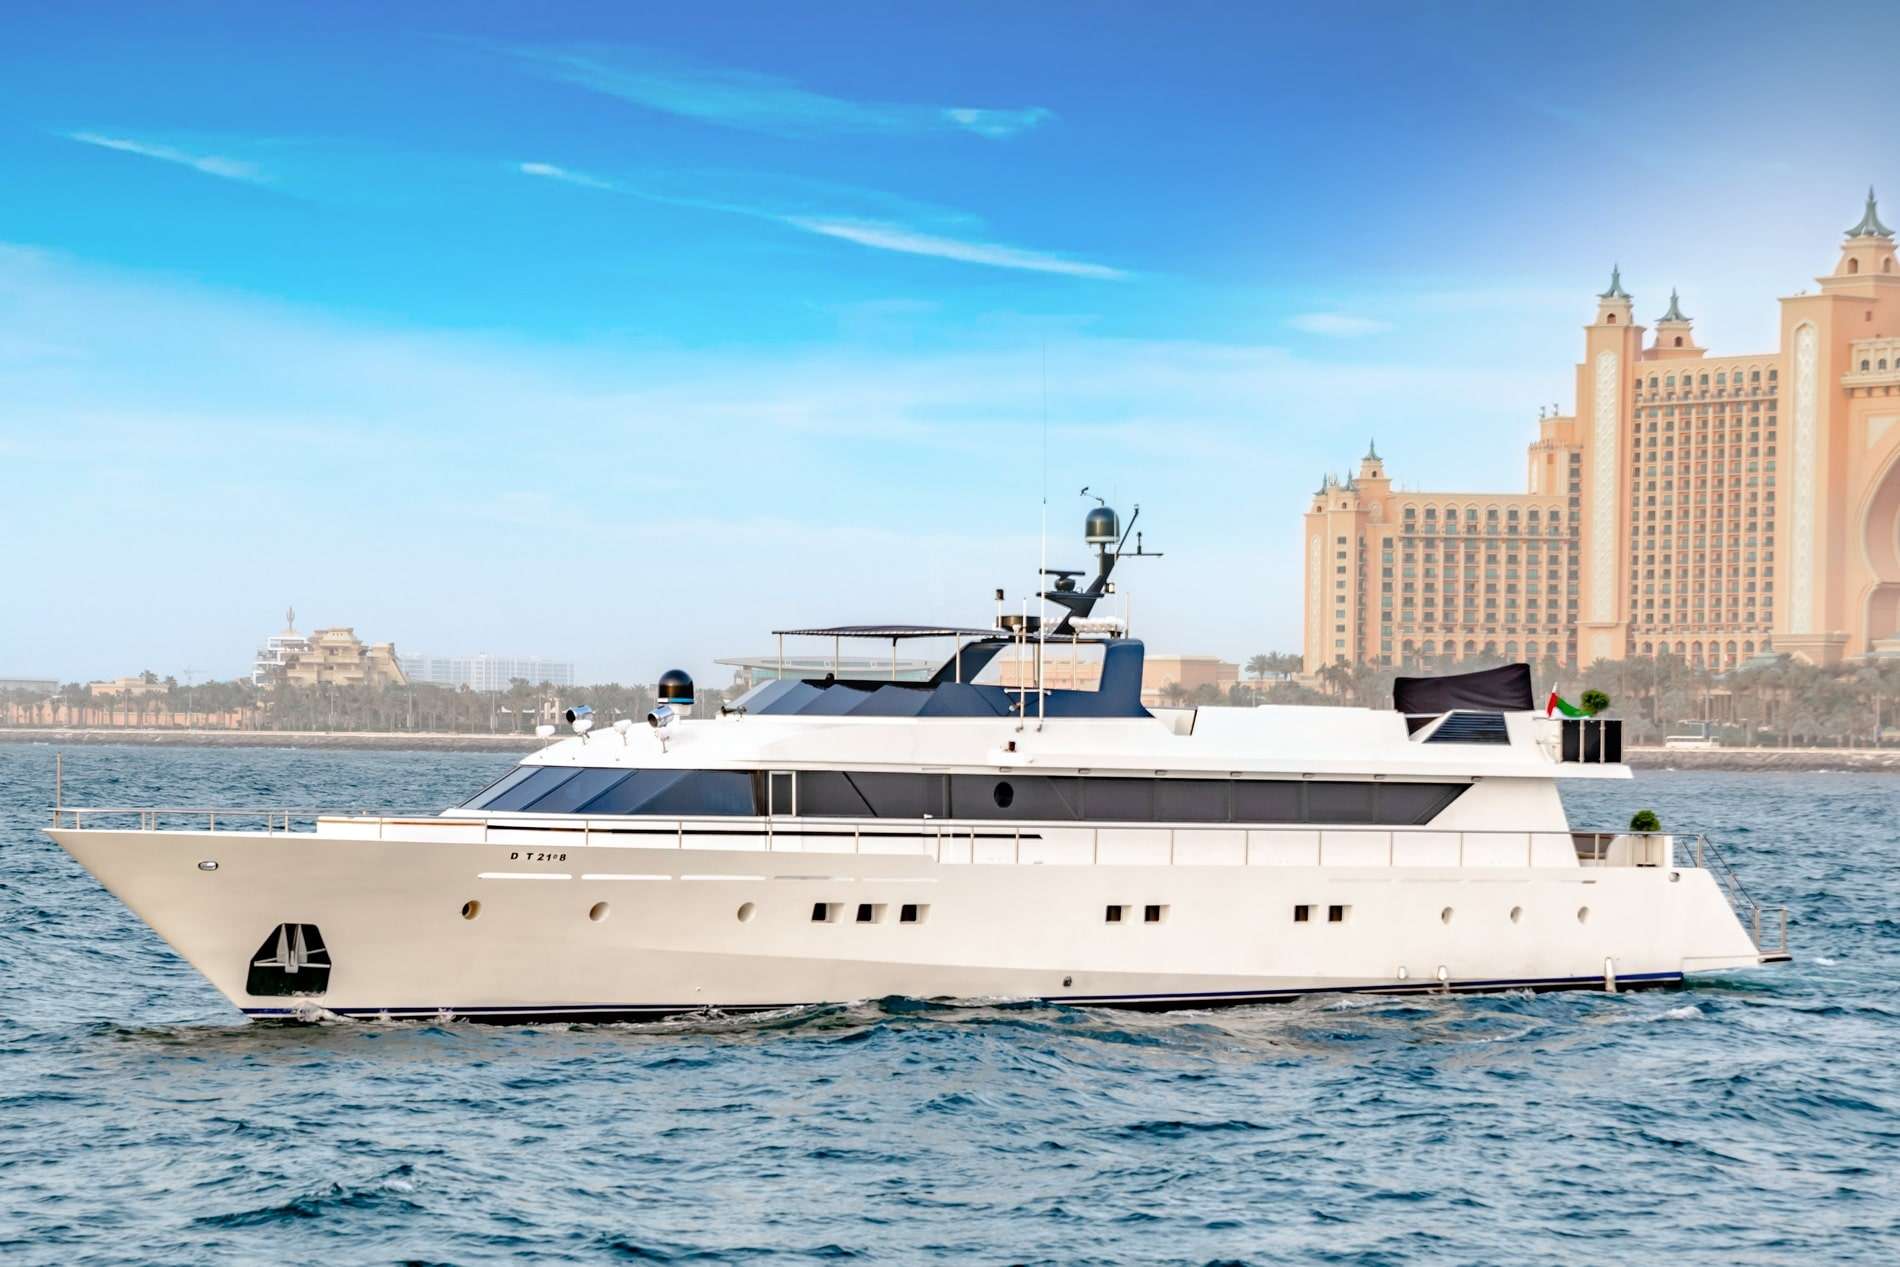 142 - Superyacht charter worldwide & Boat hire in United Arab Emirates Dubai Dubai Marina Yacht Club 1